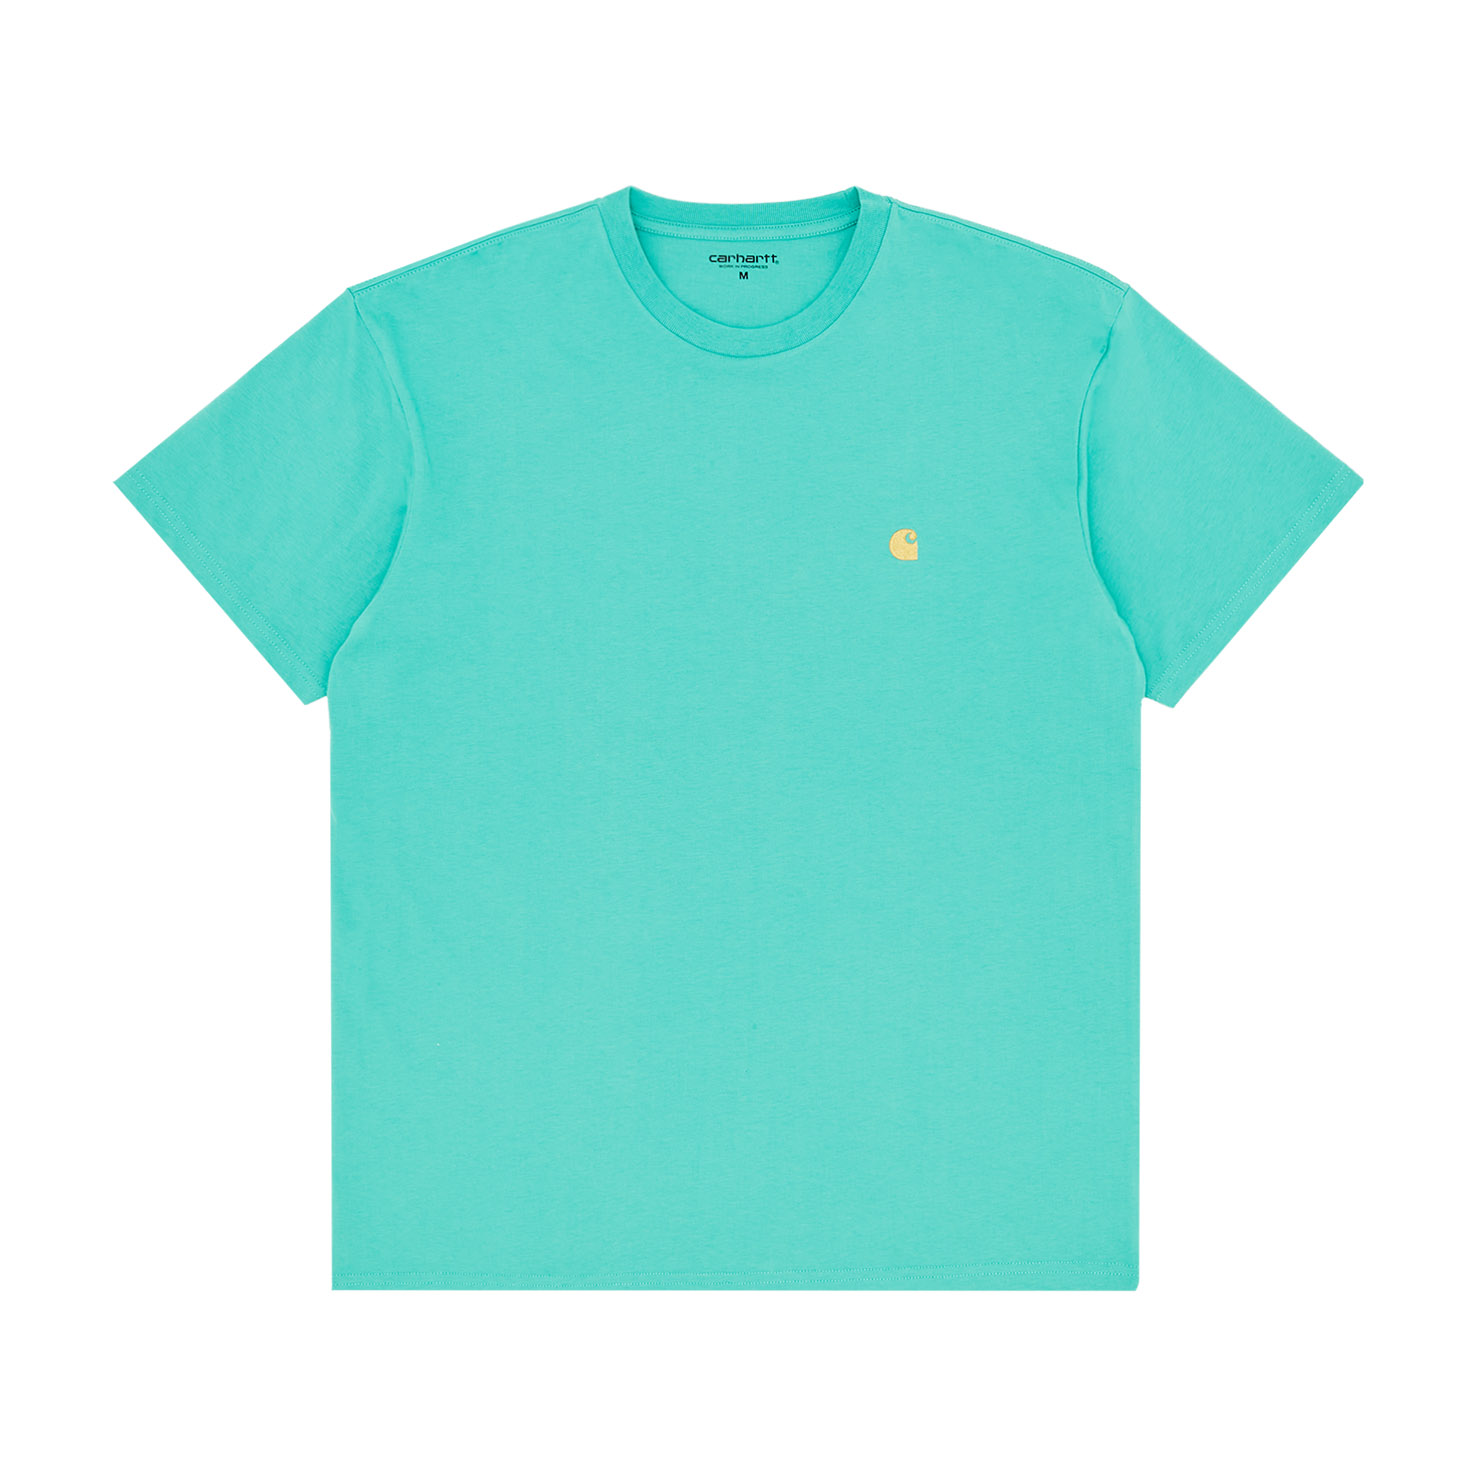 S/S Chase T-Shirt CARHARTT зеленого цвета